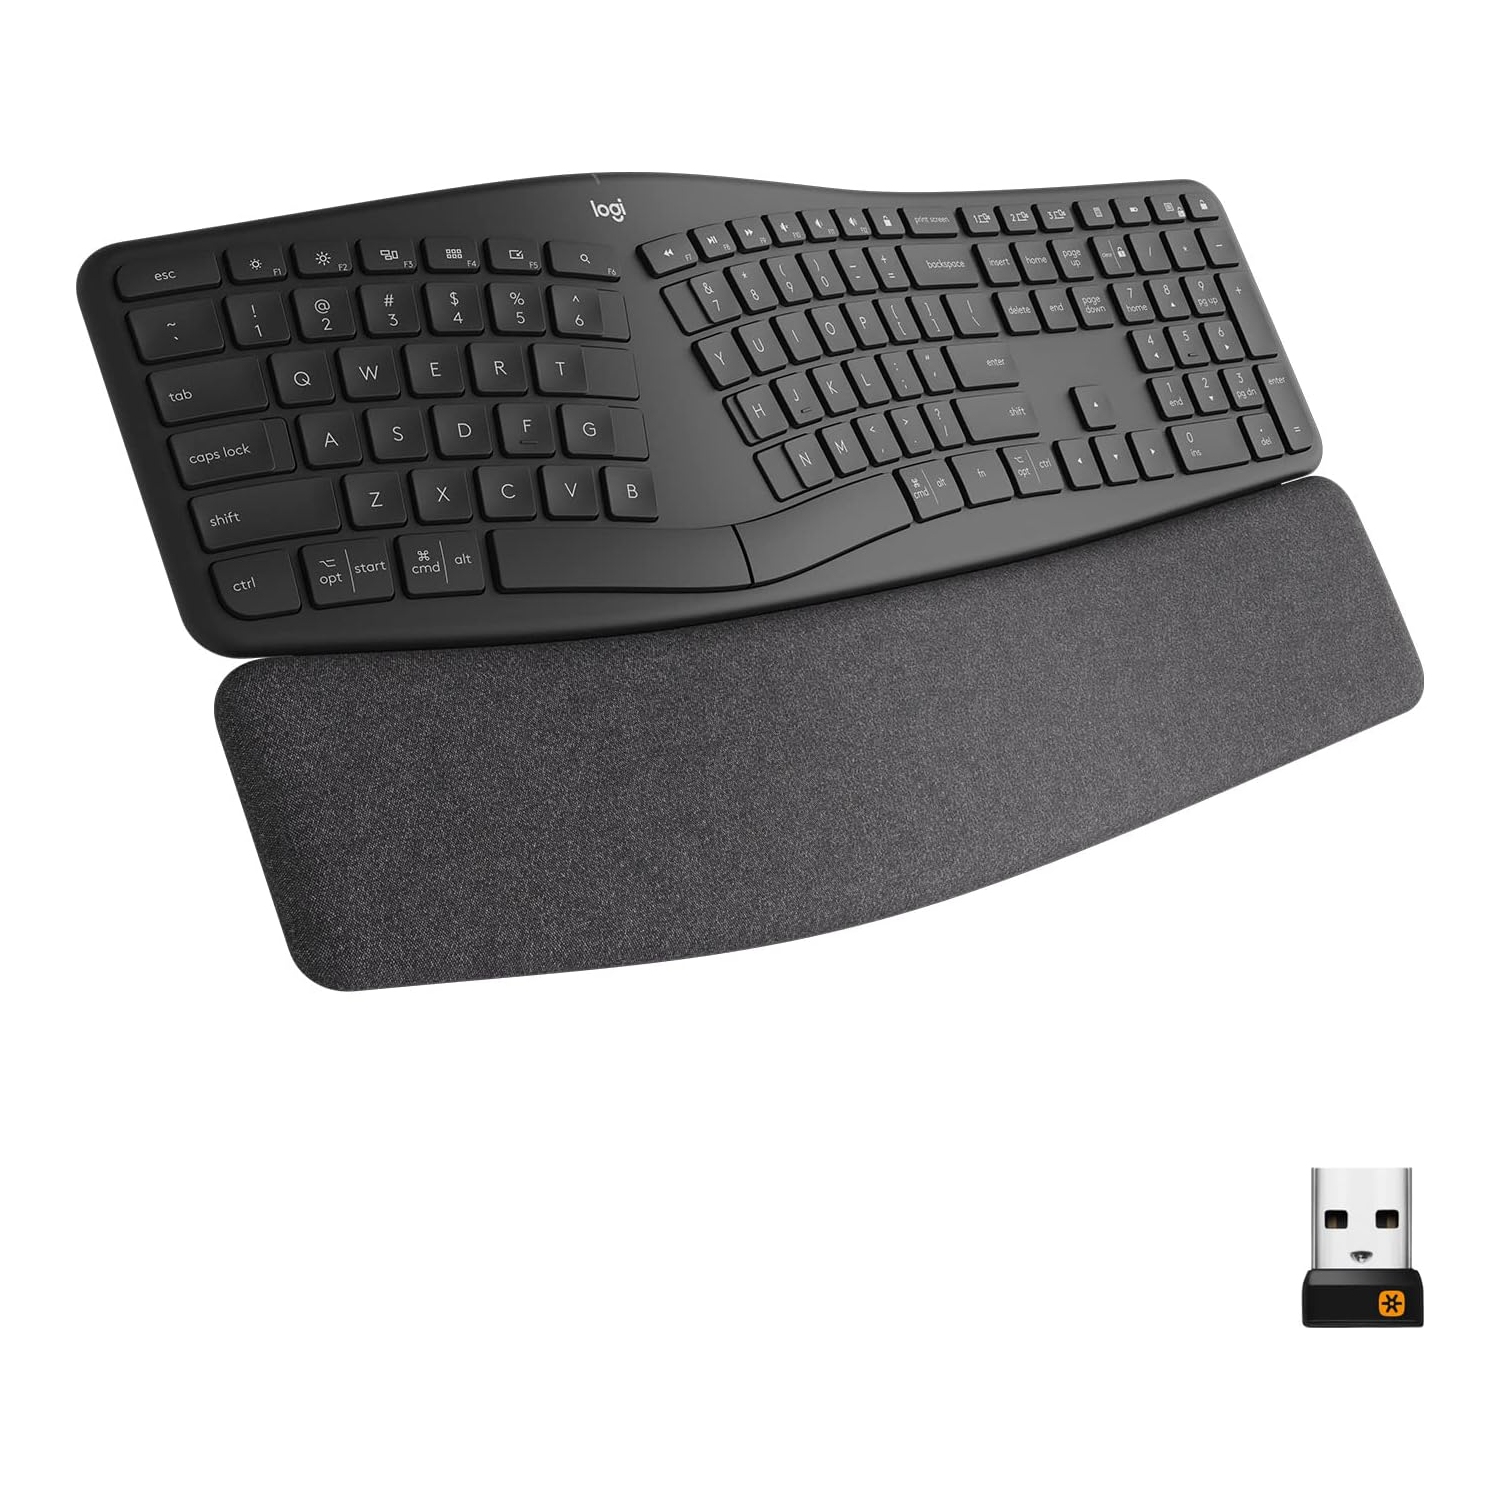 Refurbished(Excellent)- Logitech ERGO K860 Wireless Ergonomic Keyboard - Split Keyboard, Bluetooth and USB Connectivity, Compatible with Windows/Mac - Black